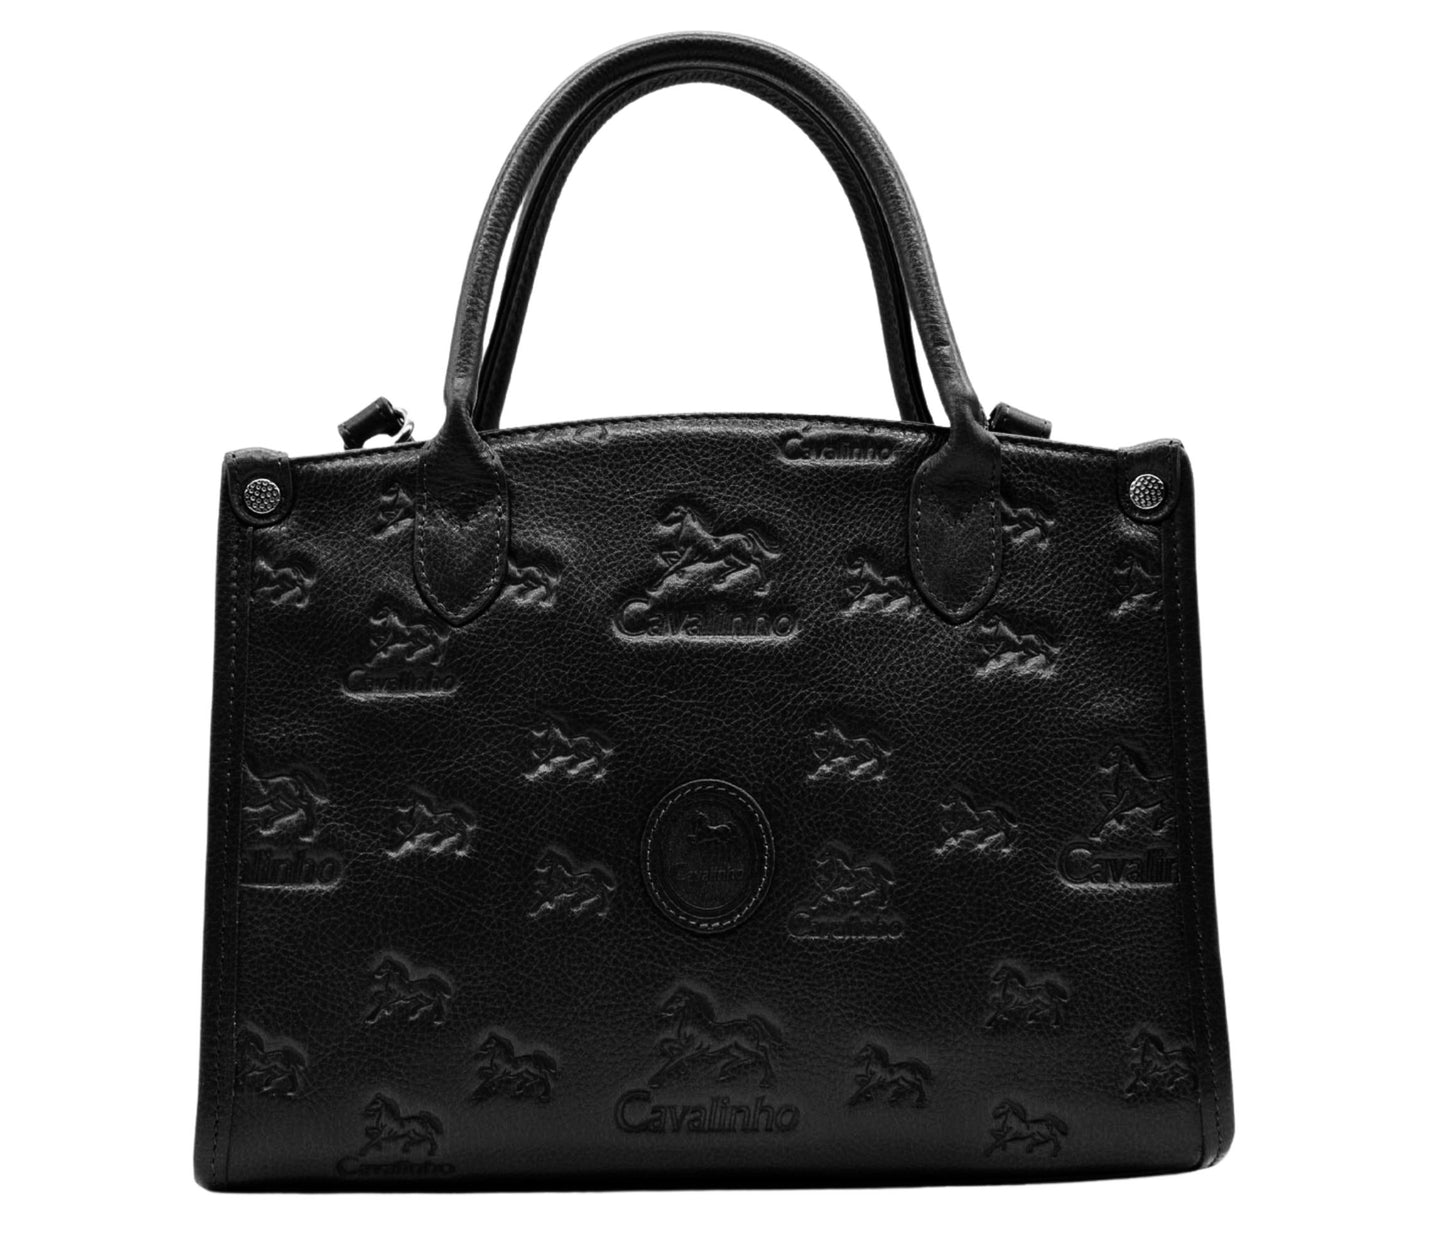 Cavalinho Cavalo Lusitano Leather Handbag - Black - 18090480.01.99